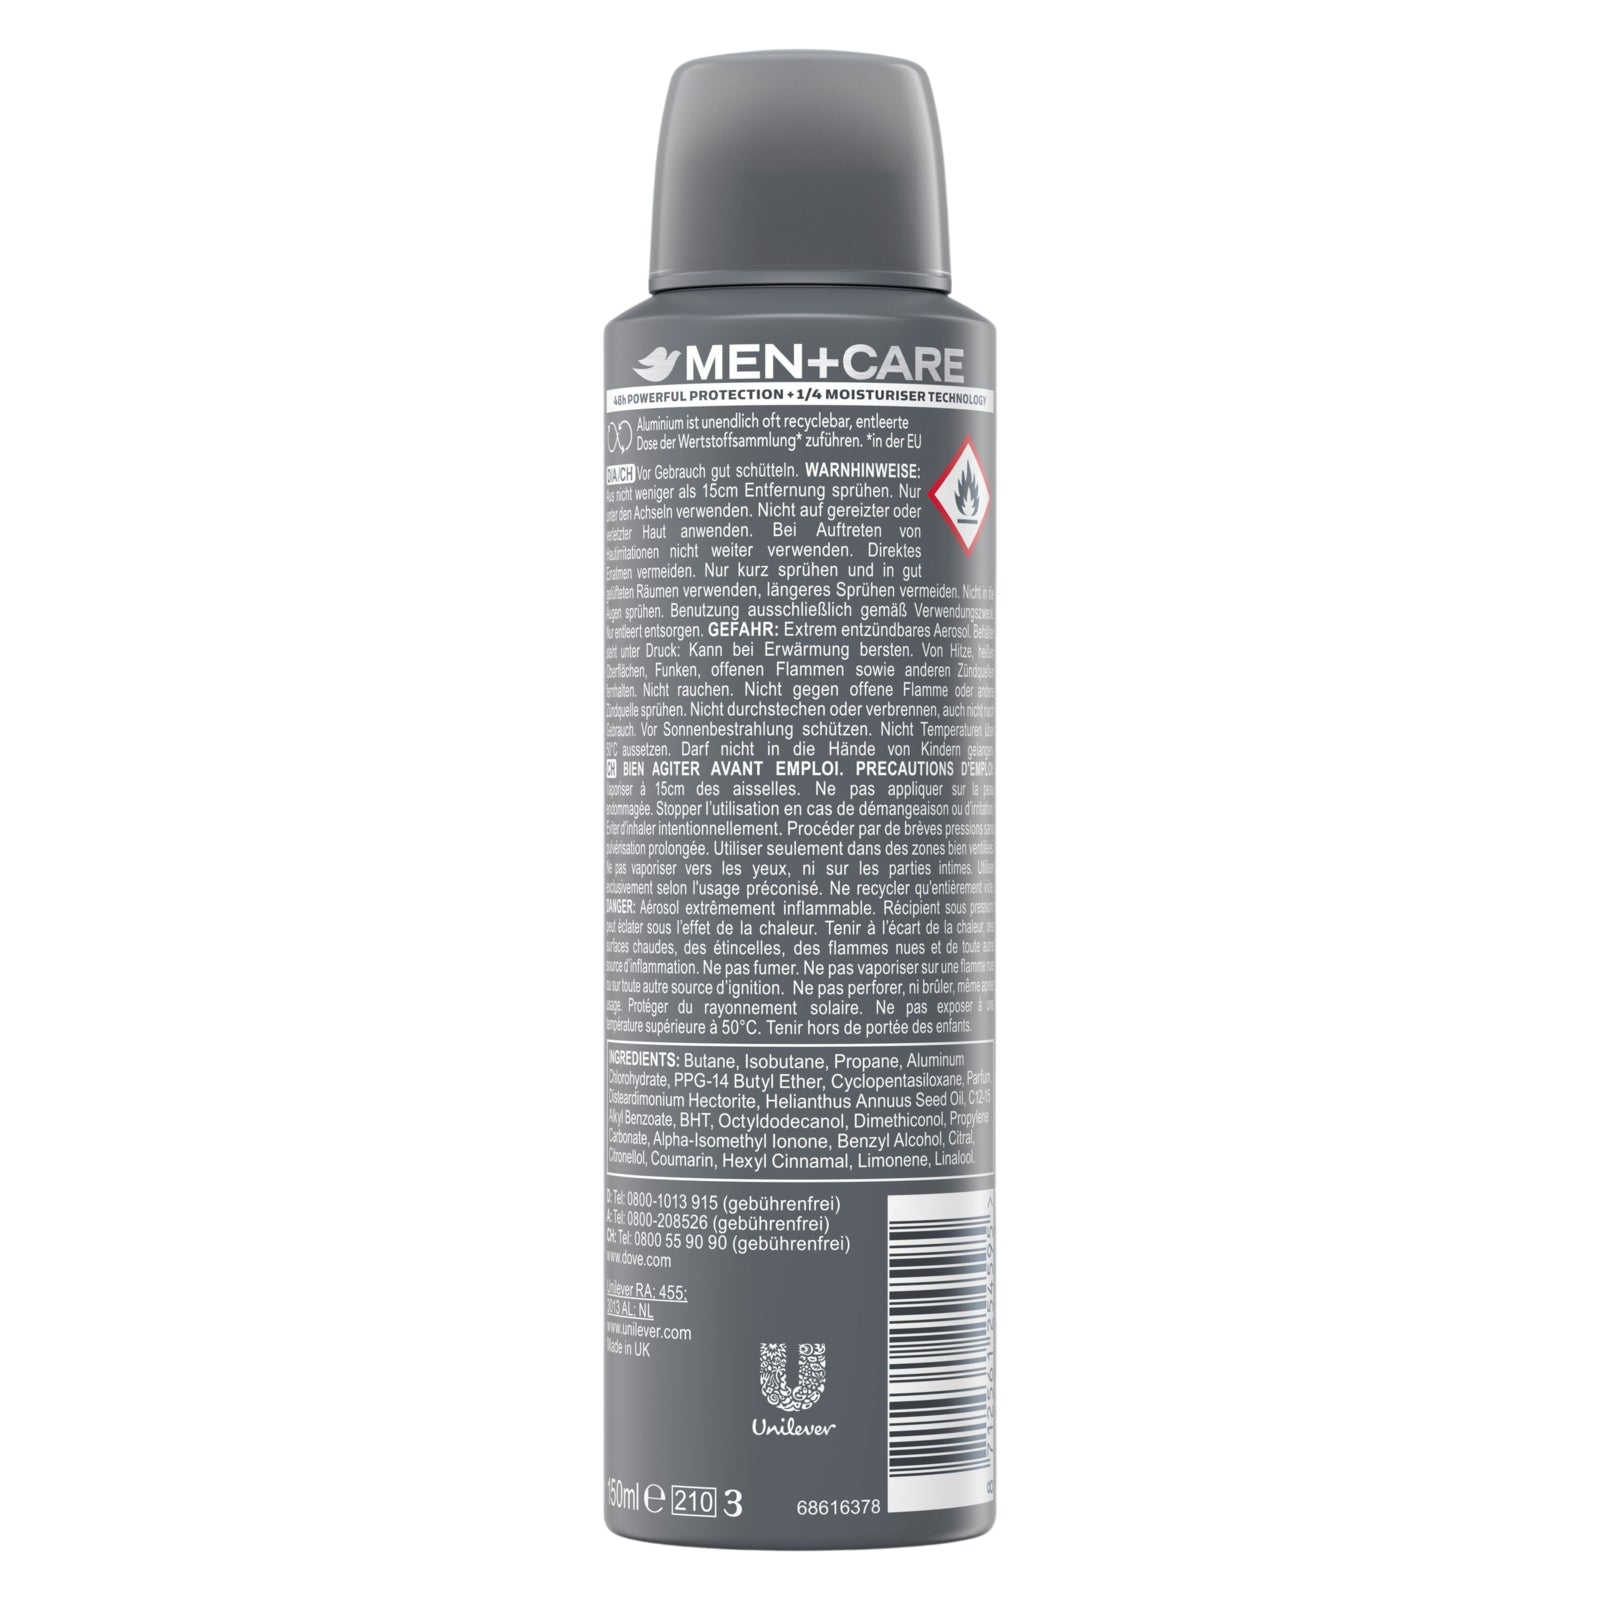 Deo-Spray Antitranspirant Clean Comfort 150ml